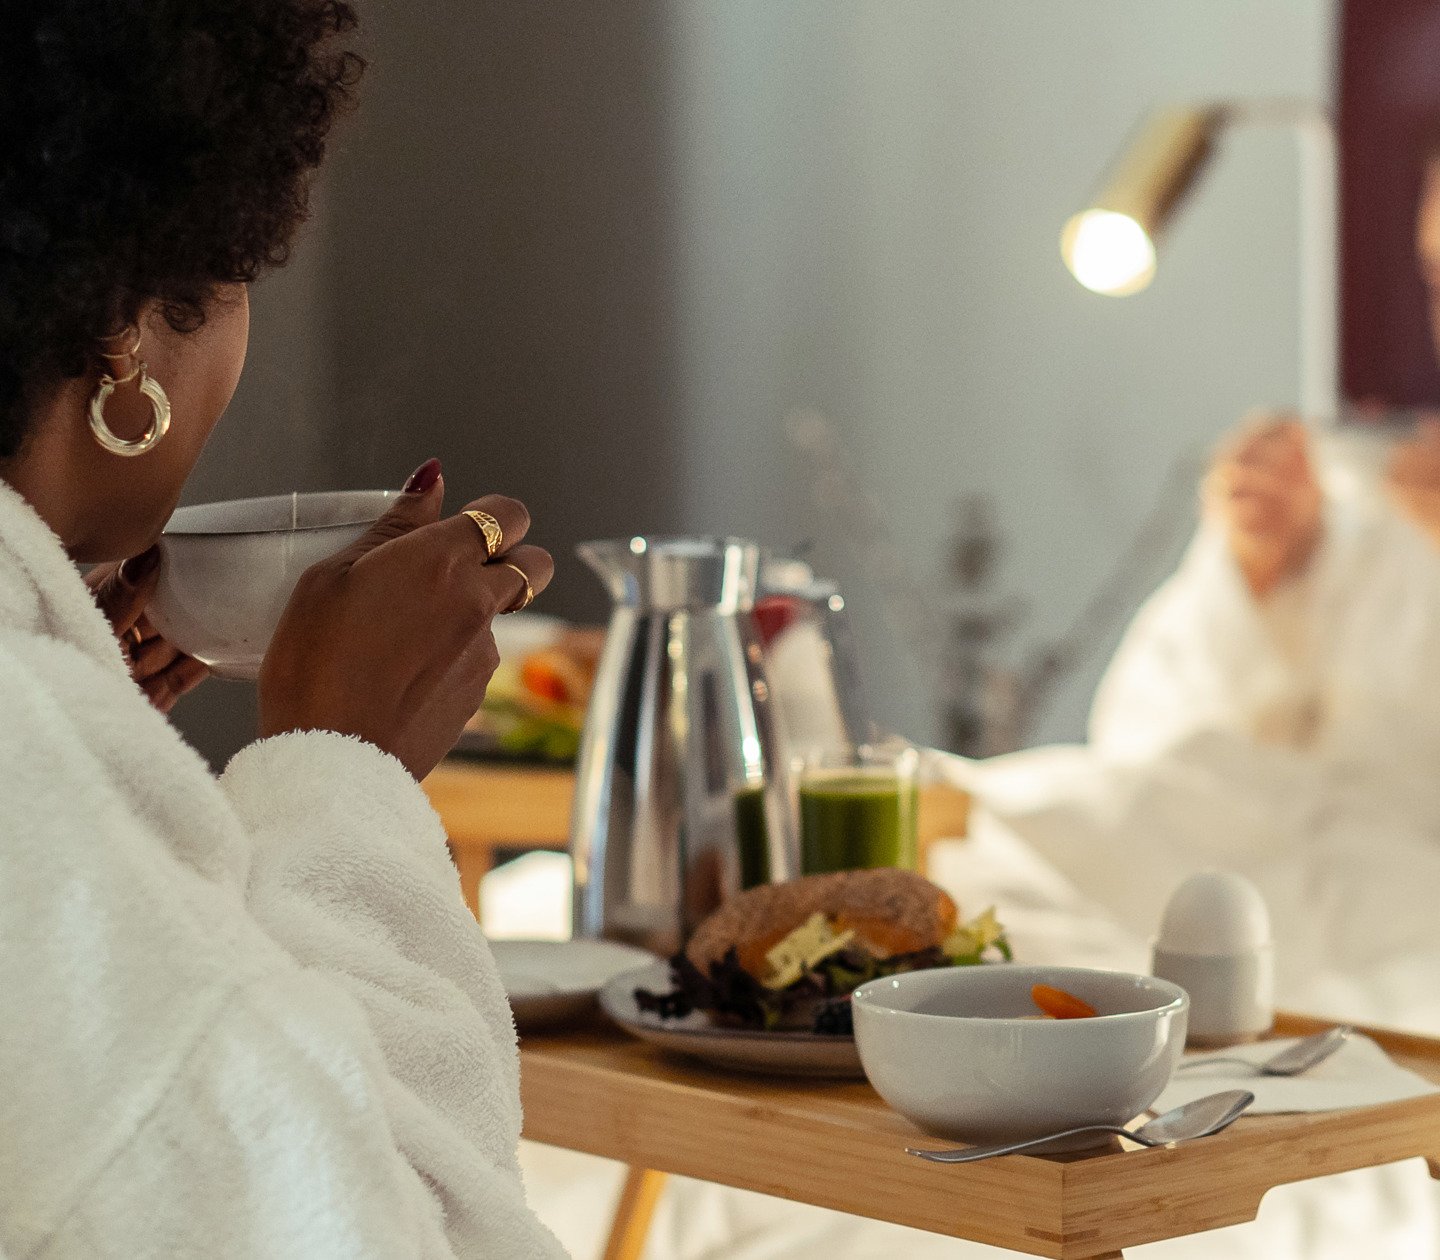 Women in a hotel bed with breakfast tray